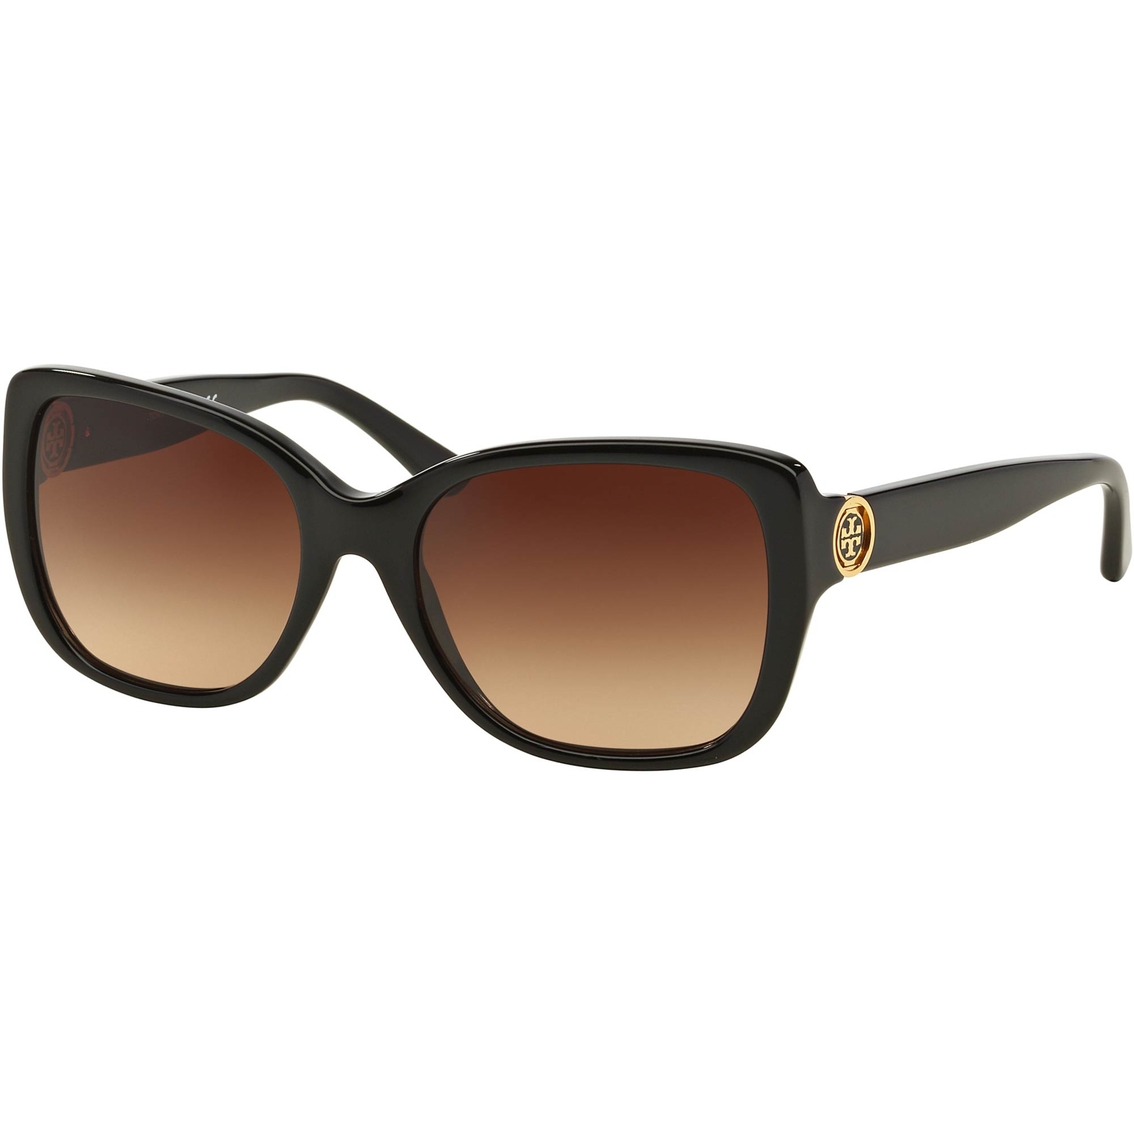 Tory Burch Rectangular Sunglasses 0ty7086-13 | Sunglasses | Clothing ...